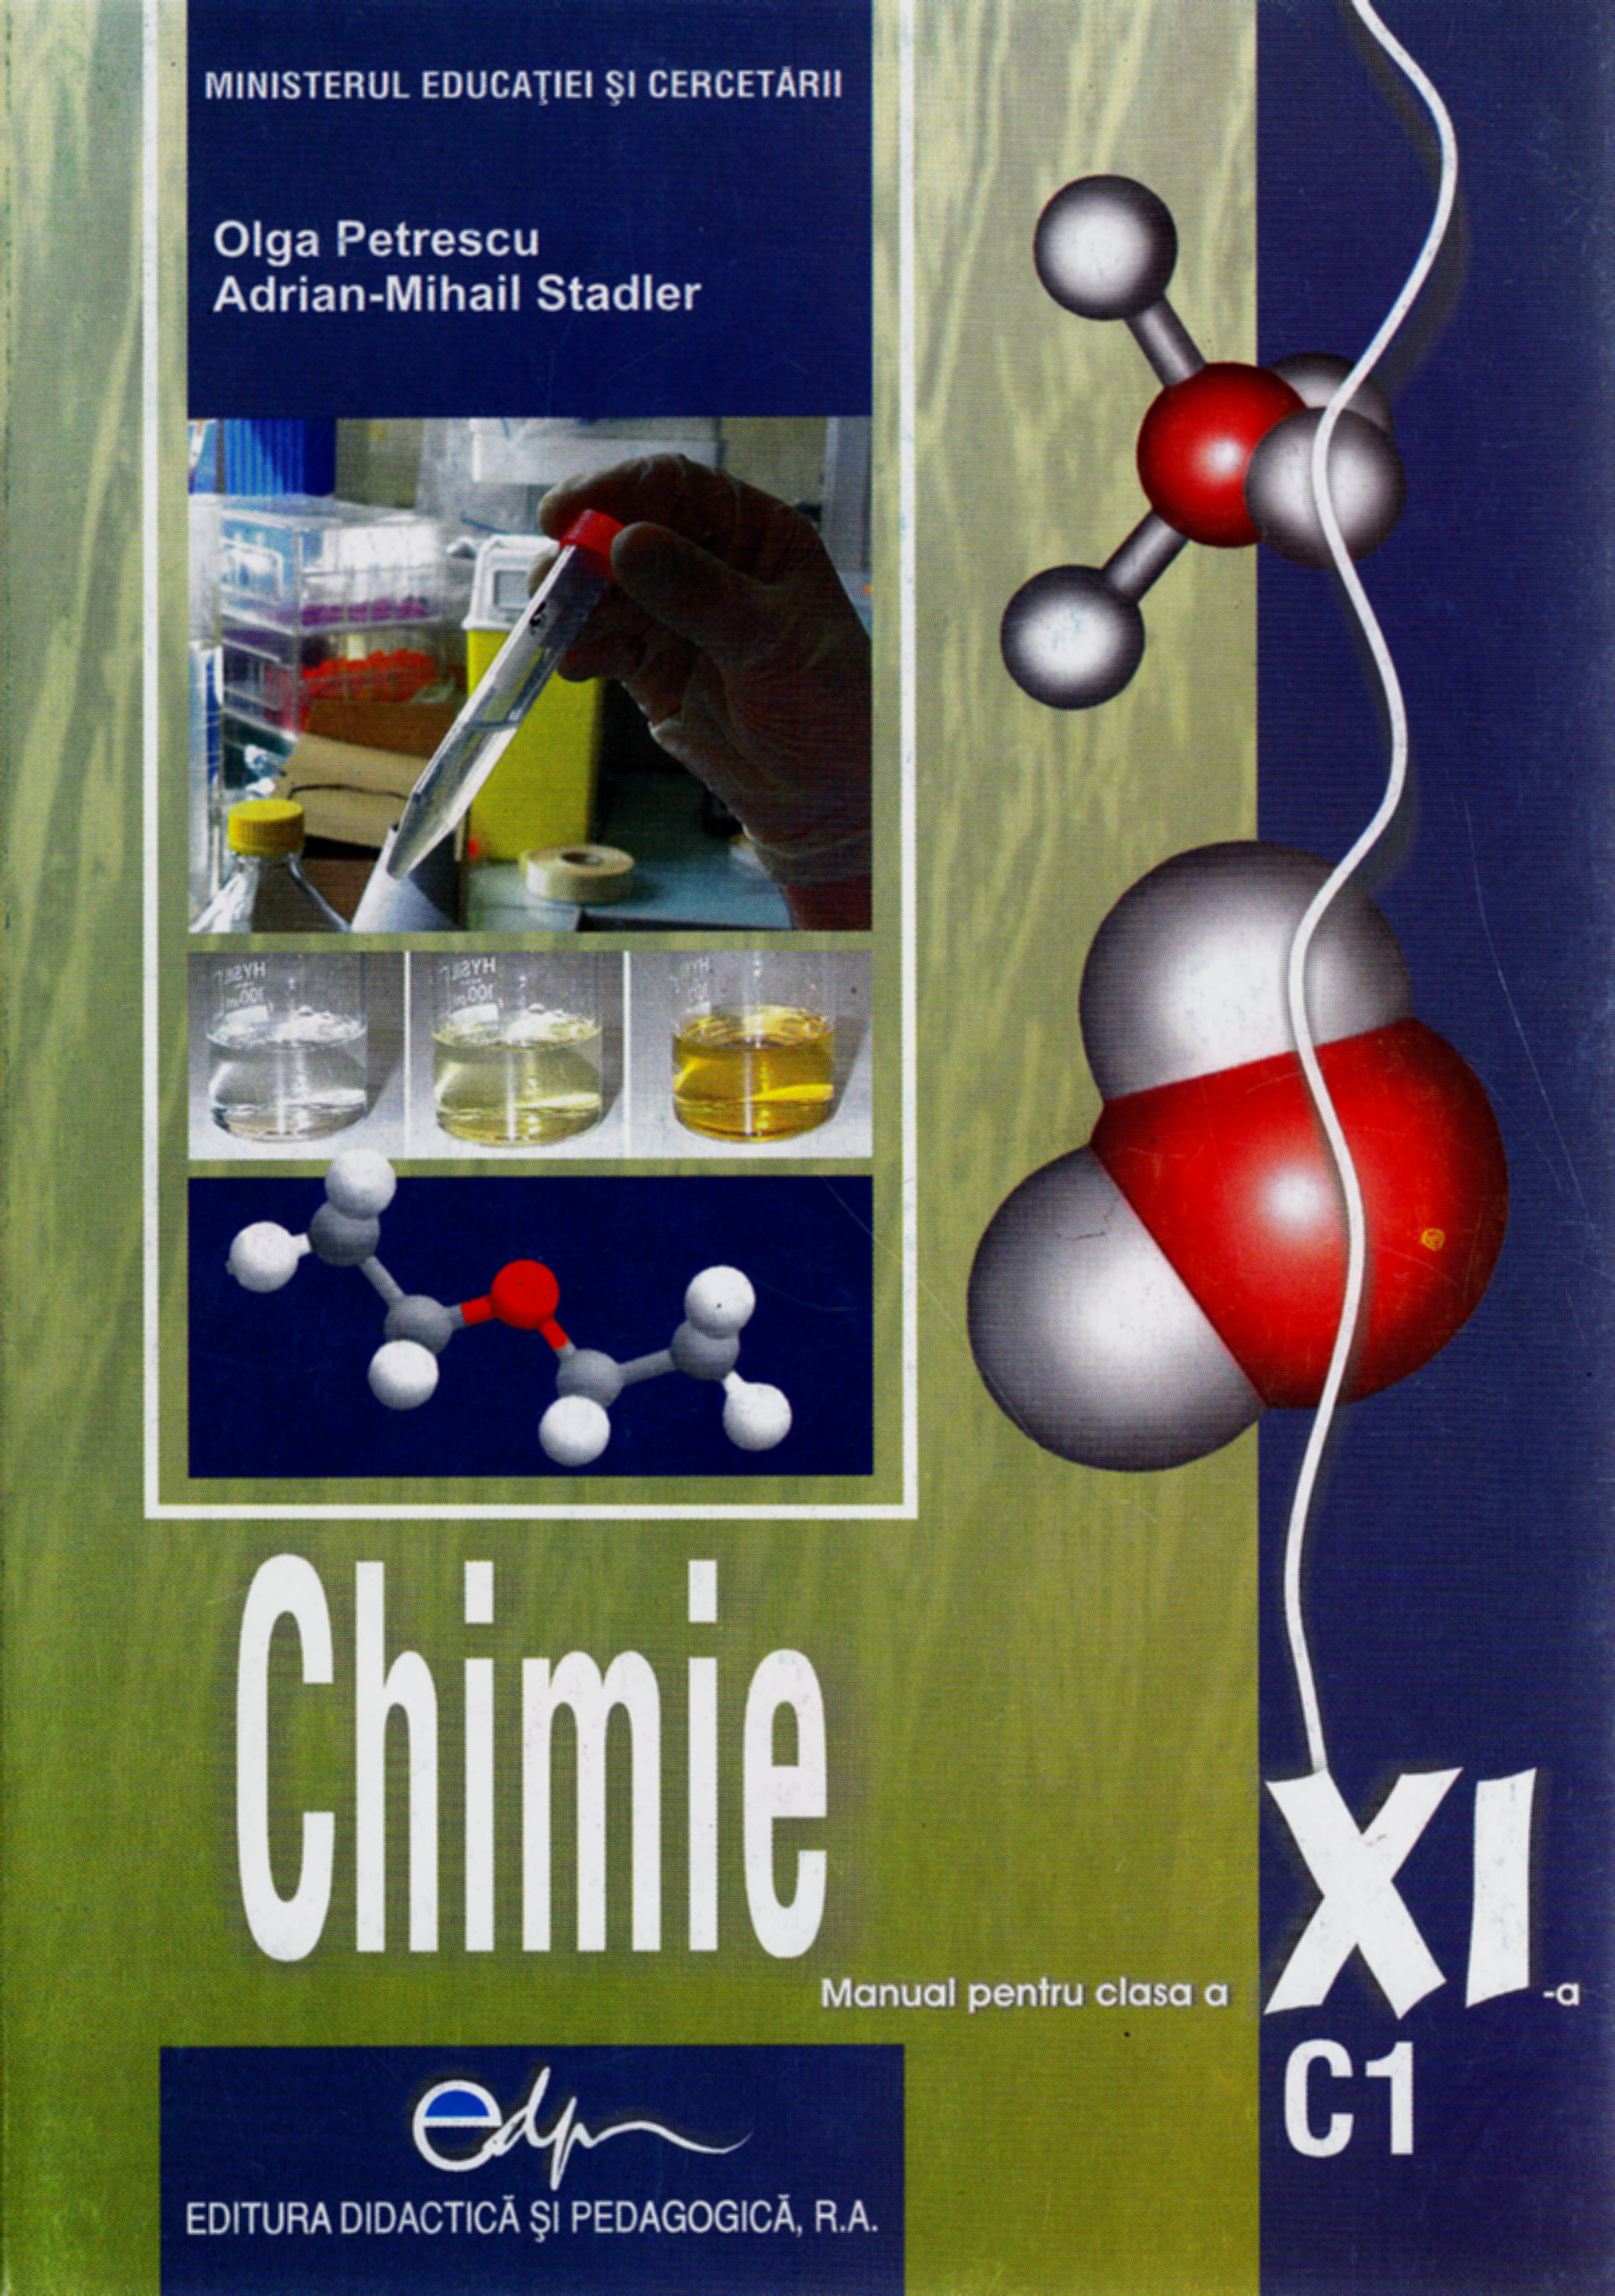 Manual chimie clasa 11 C1 - Olga Petrescu, Adrian-Mihail Stadler